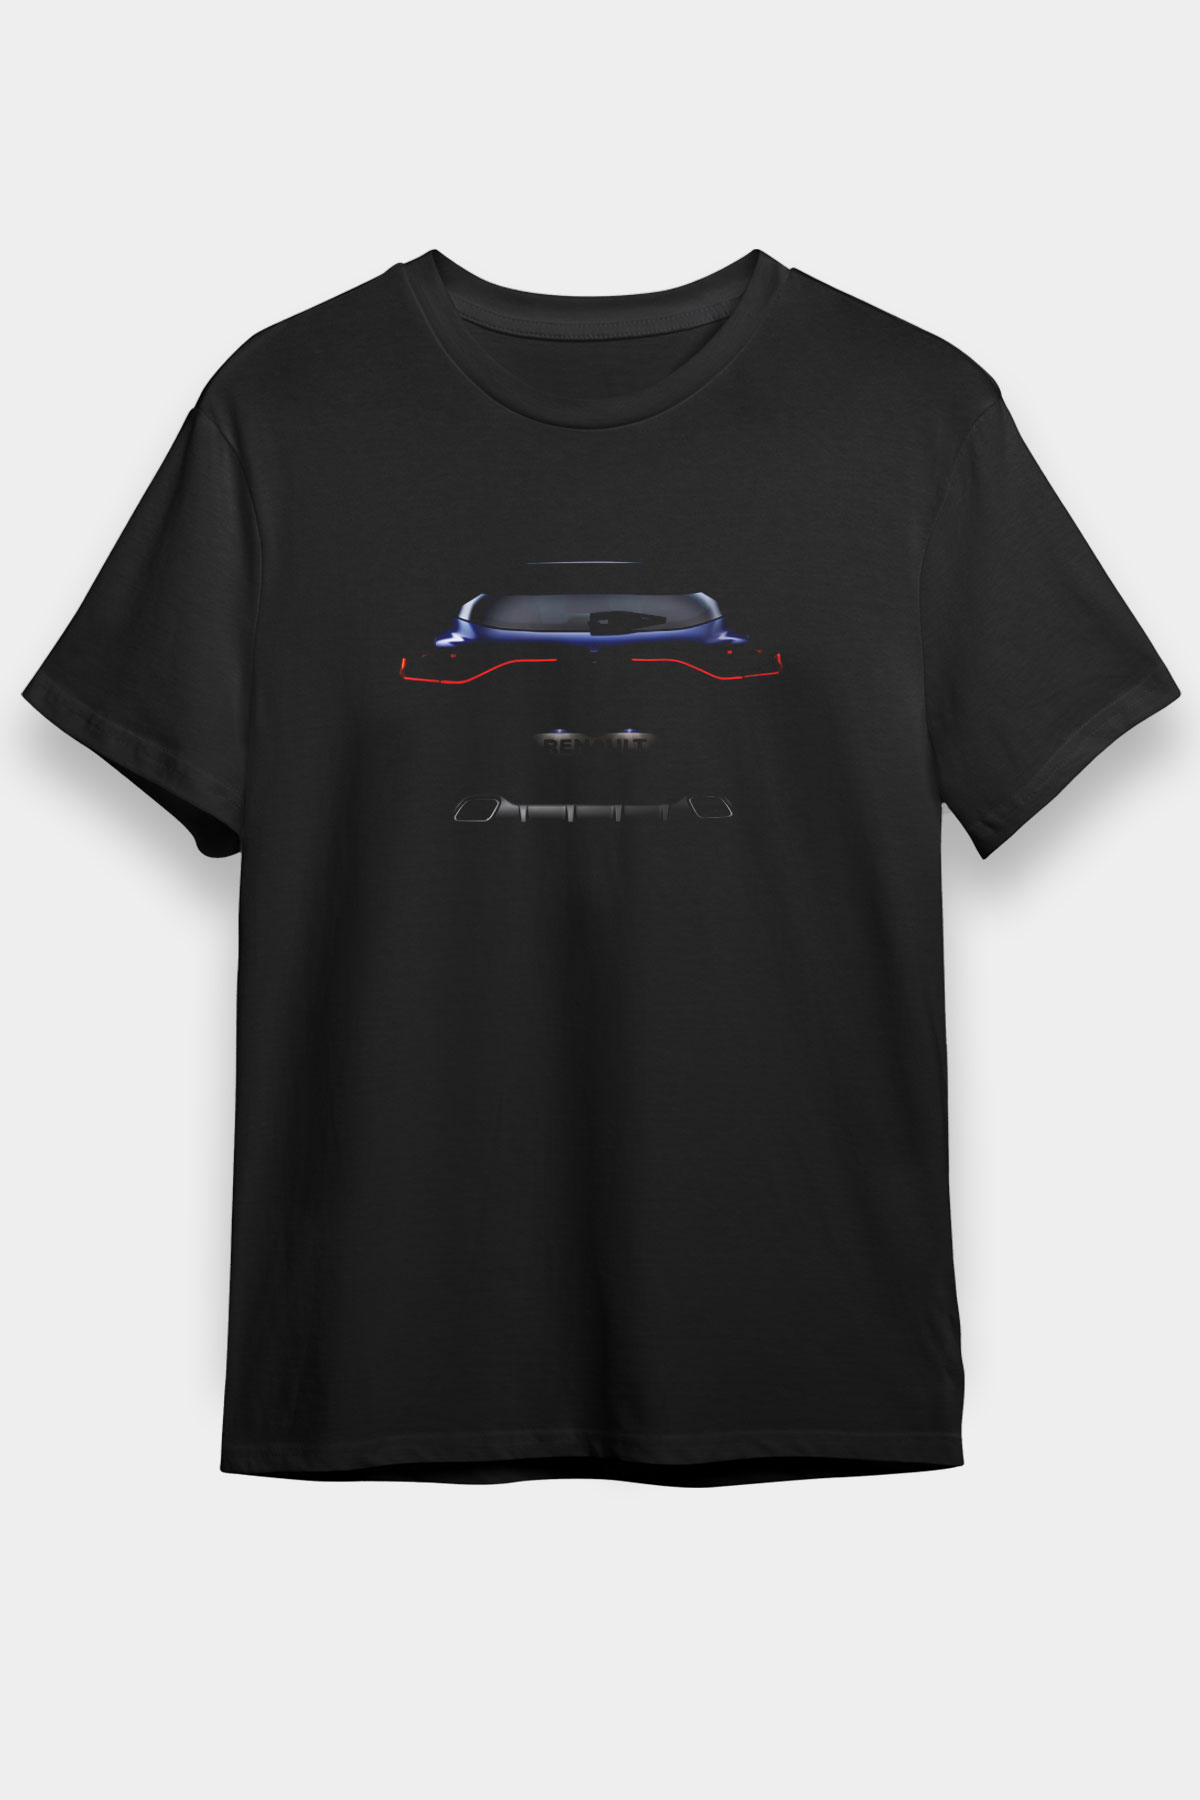 Renault,Cars,Racing,Black,Unisex,Tshirt 05